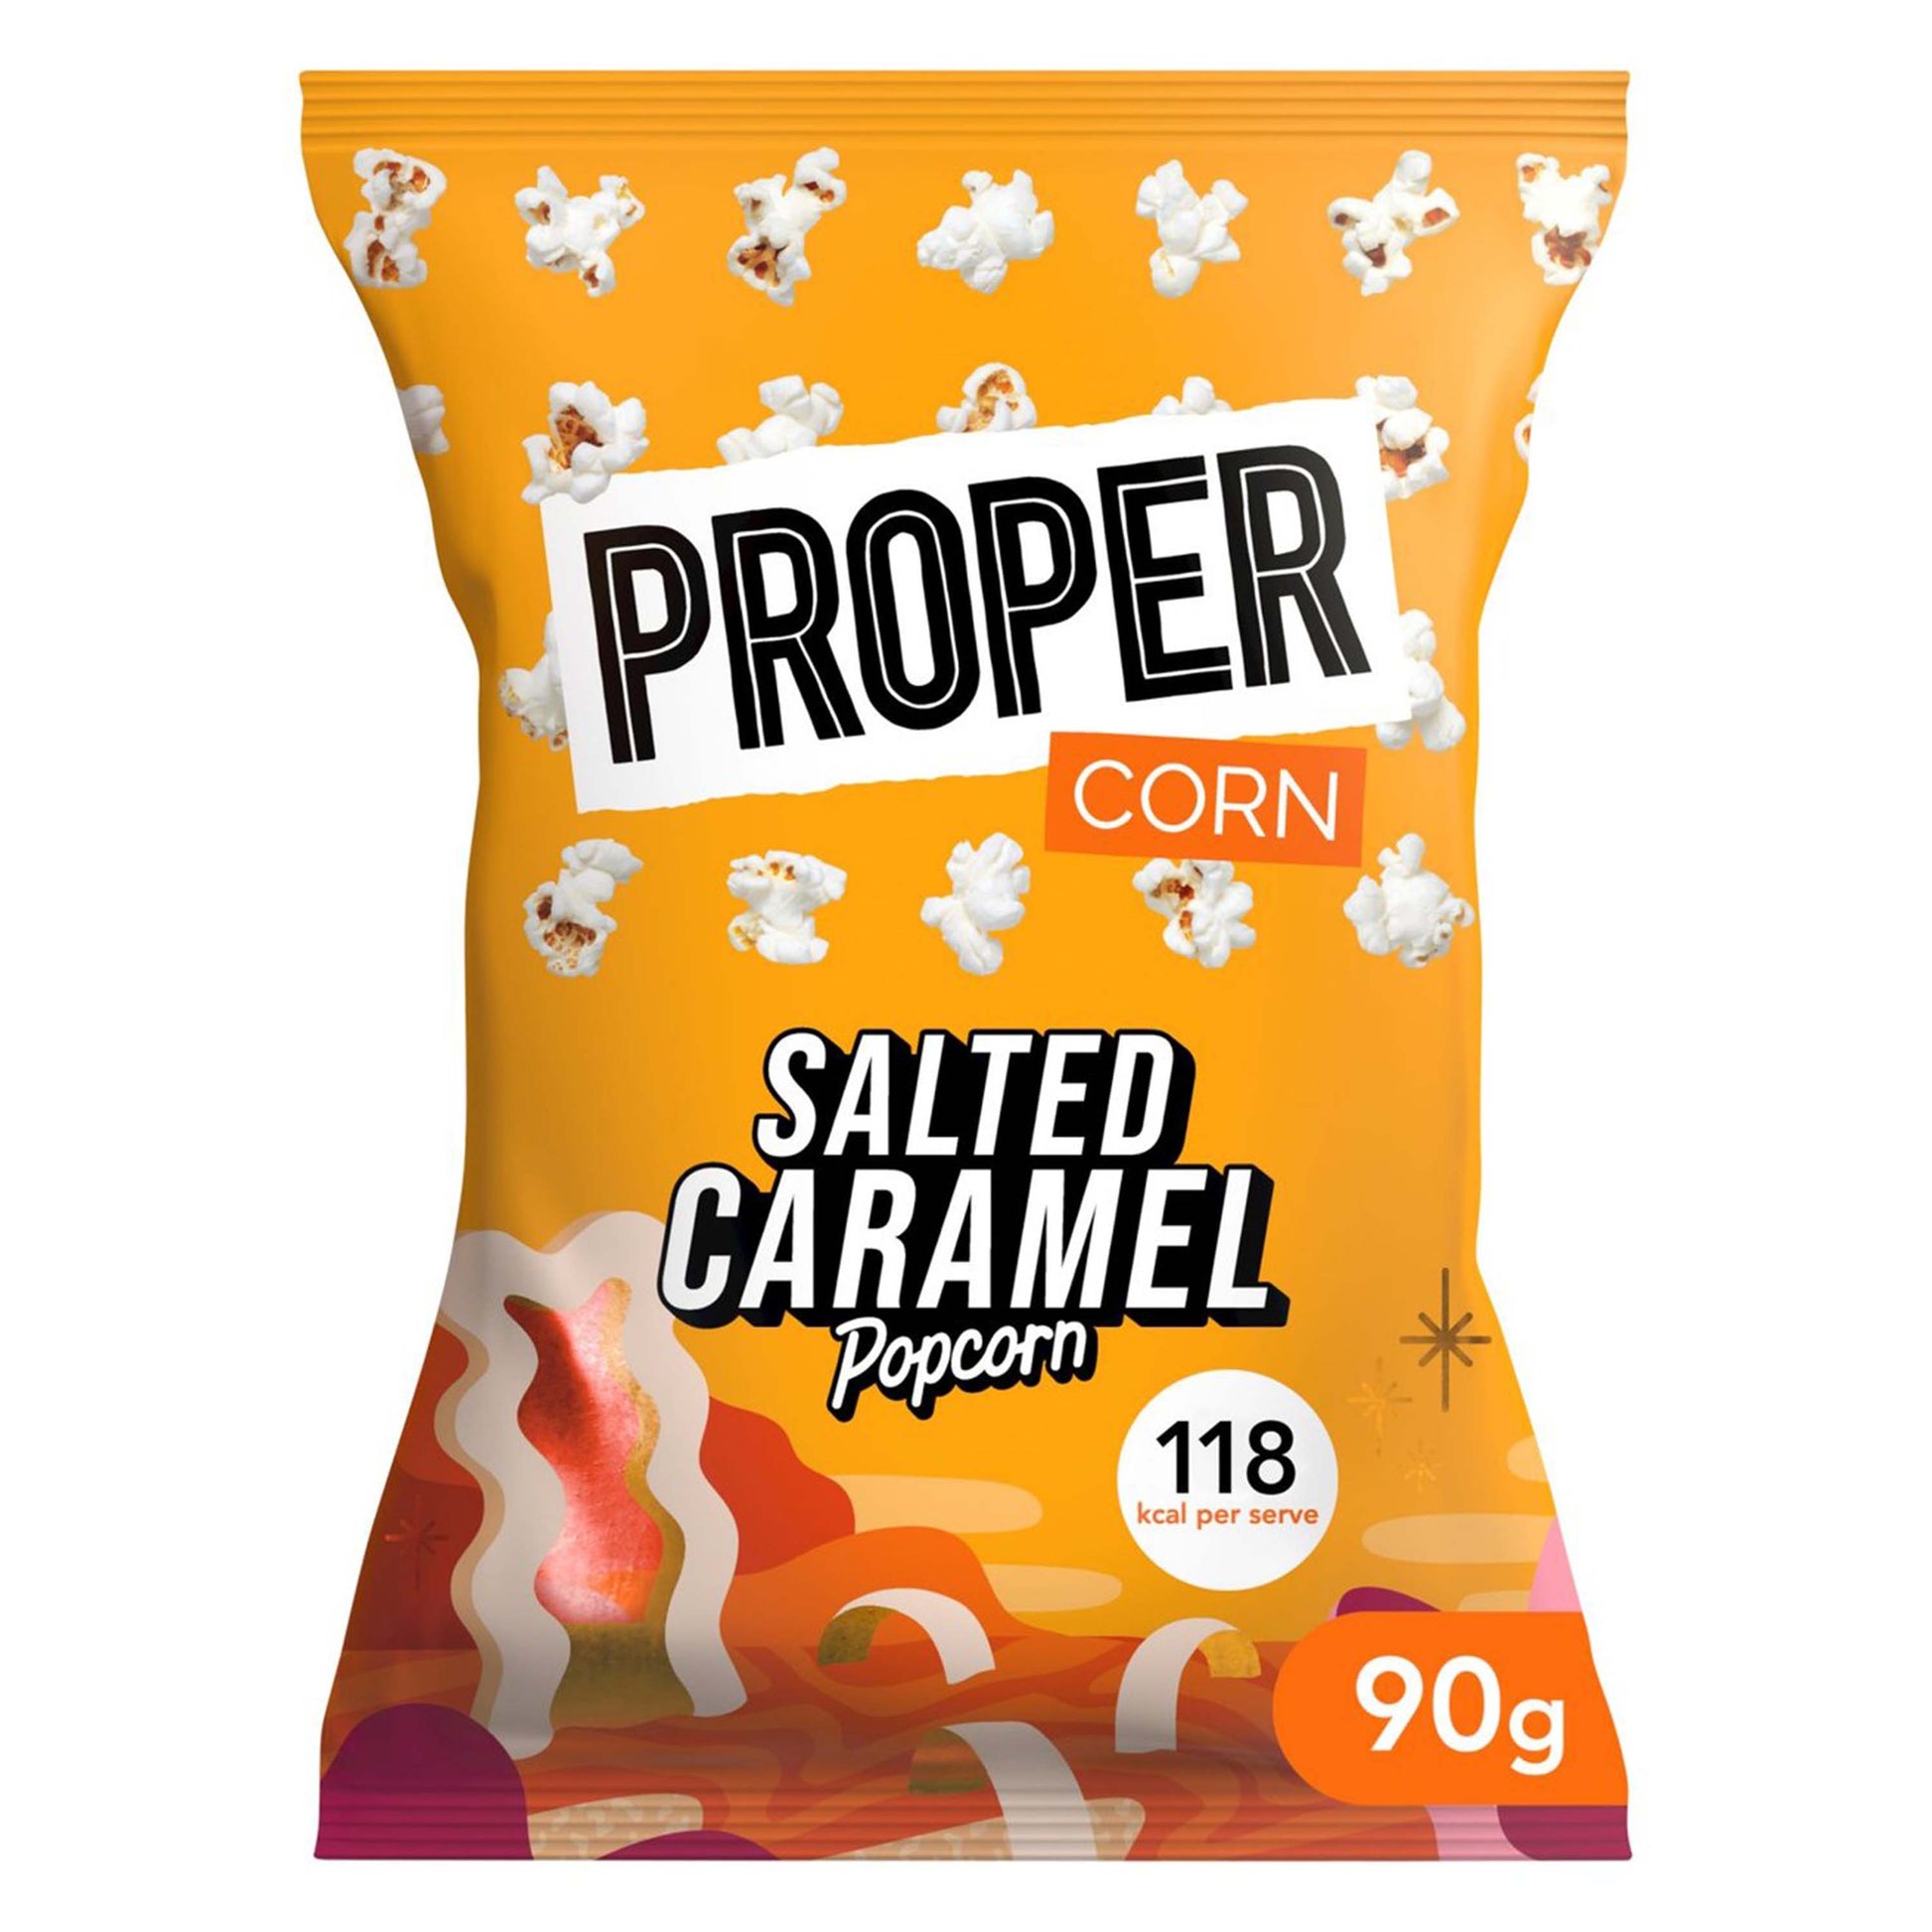 Propercorn Salted Caramel Popcorn - 90g - British Snacks